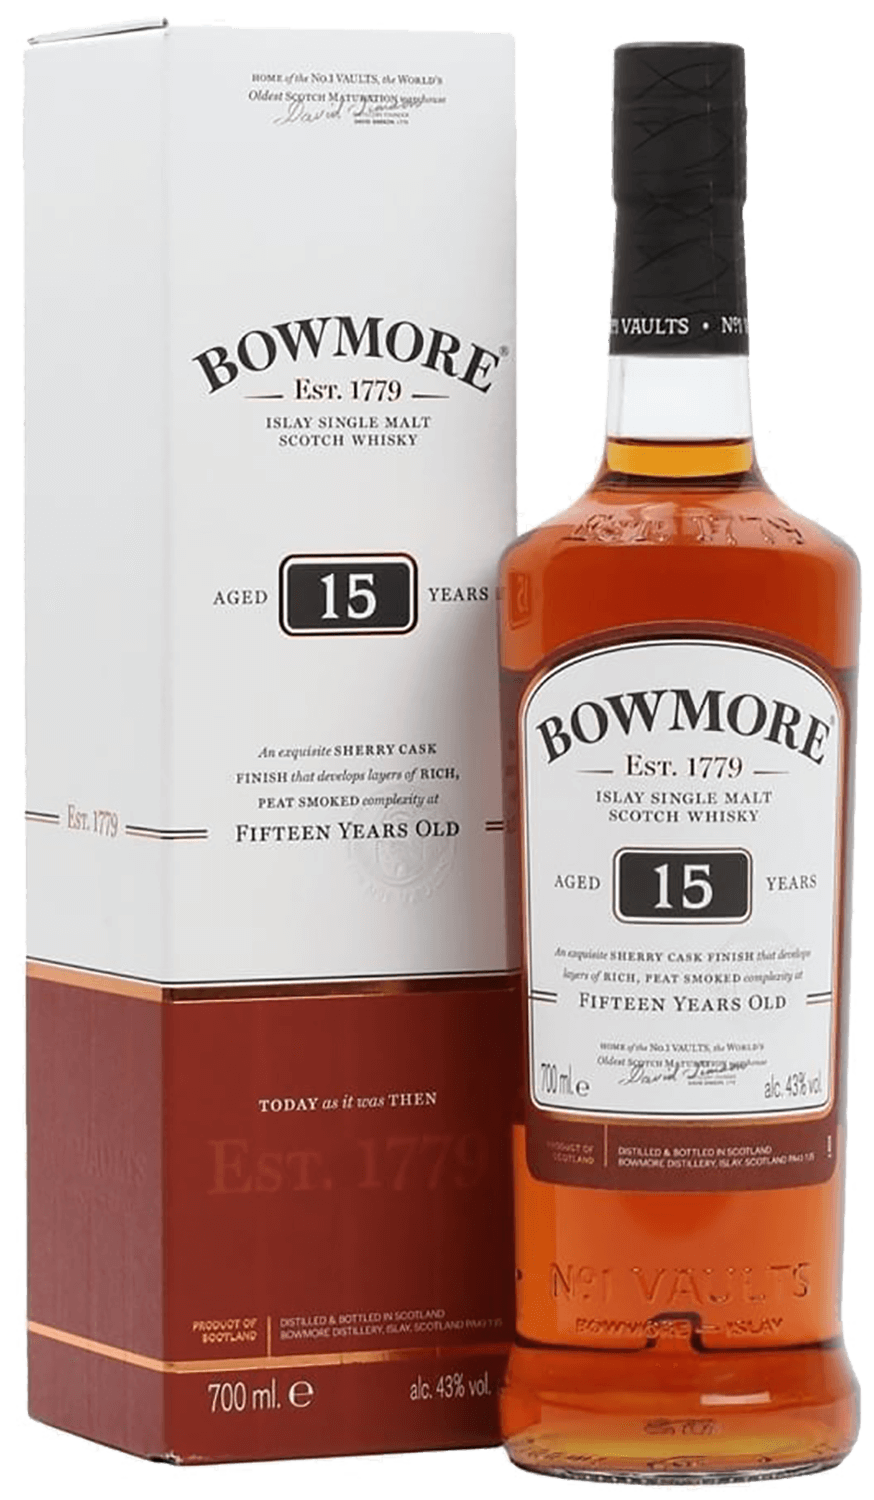 Bowmore 15 y.o. Islay single malt scotch whisky (gift box) bunnahabhain aonadh islay single malt scotch whisky